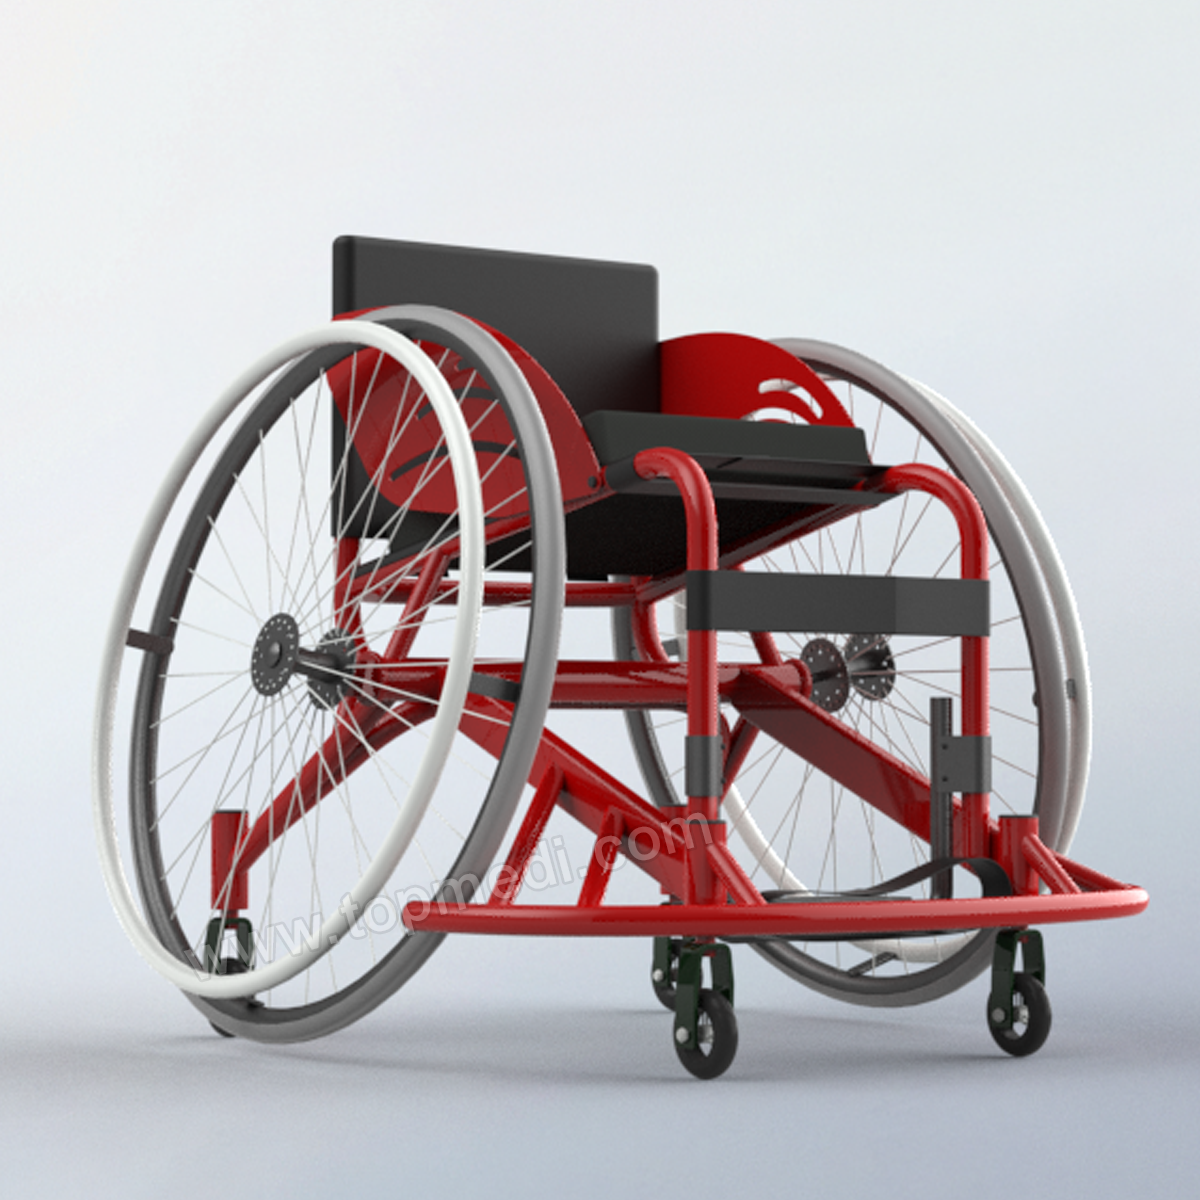 The court equipment of wheelchair basketball